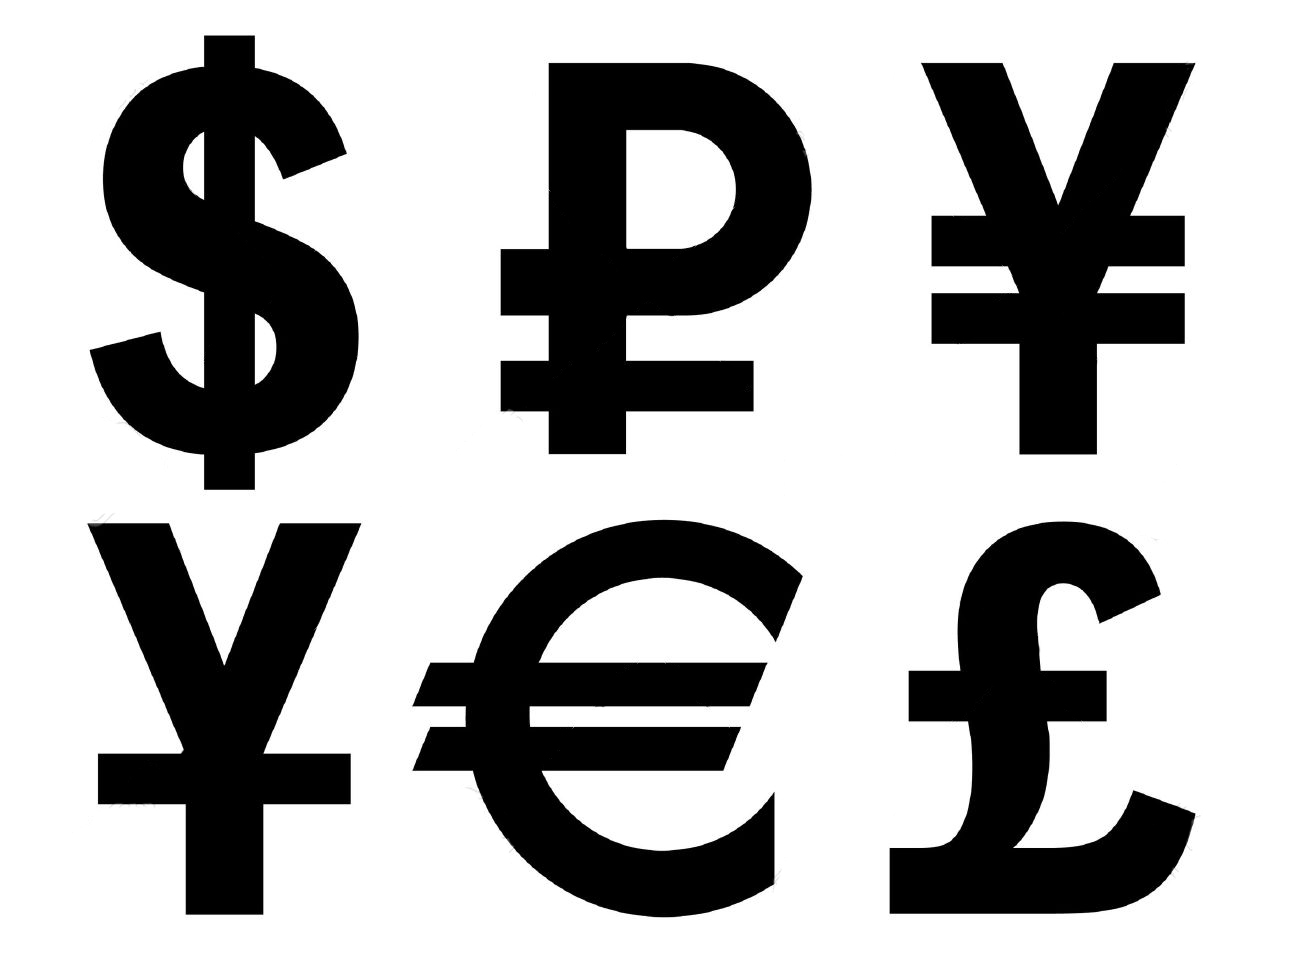 Cbr currency. Знаки валют. Значки валют. Денежные символы. Символы денежных единиц.